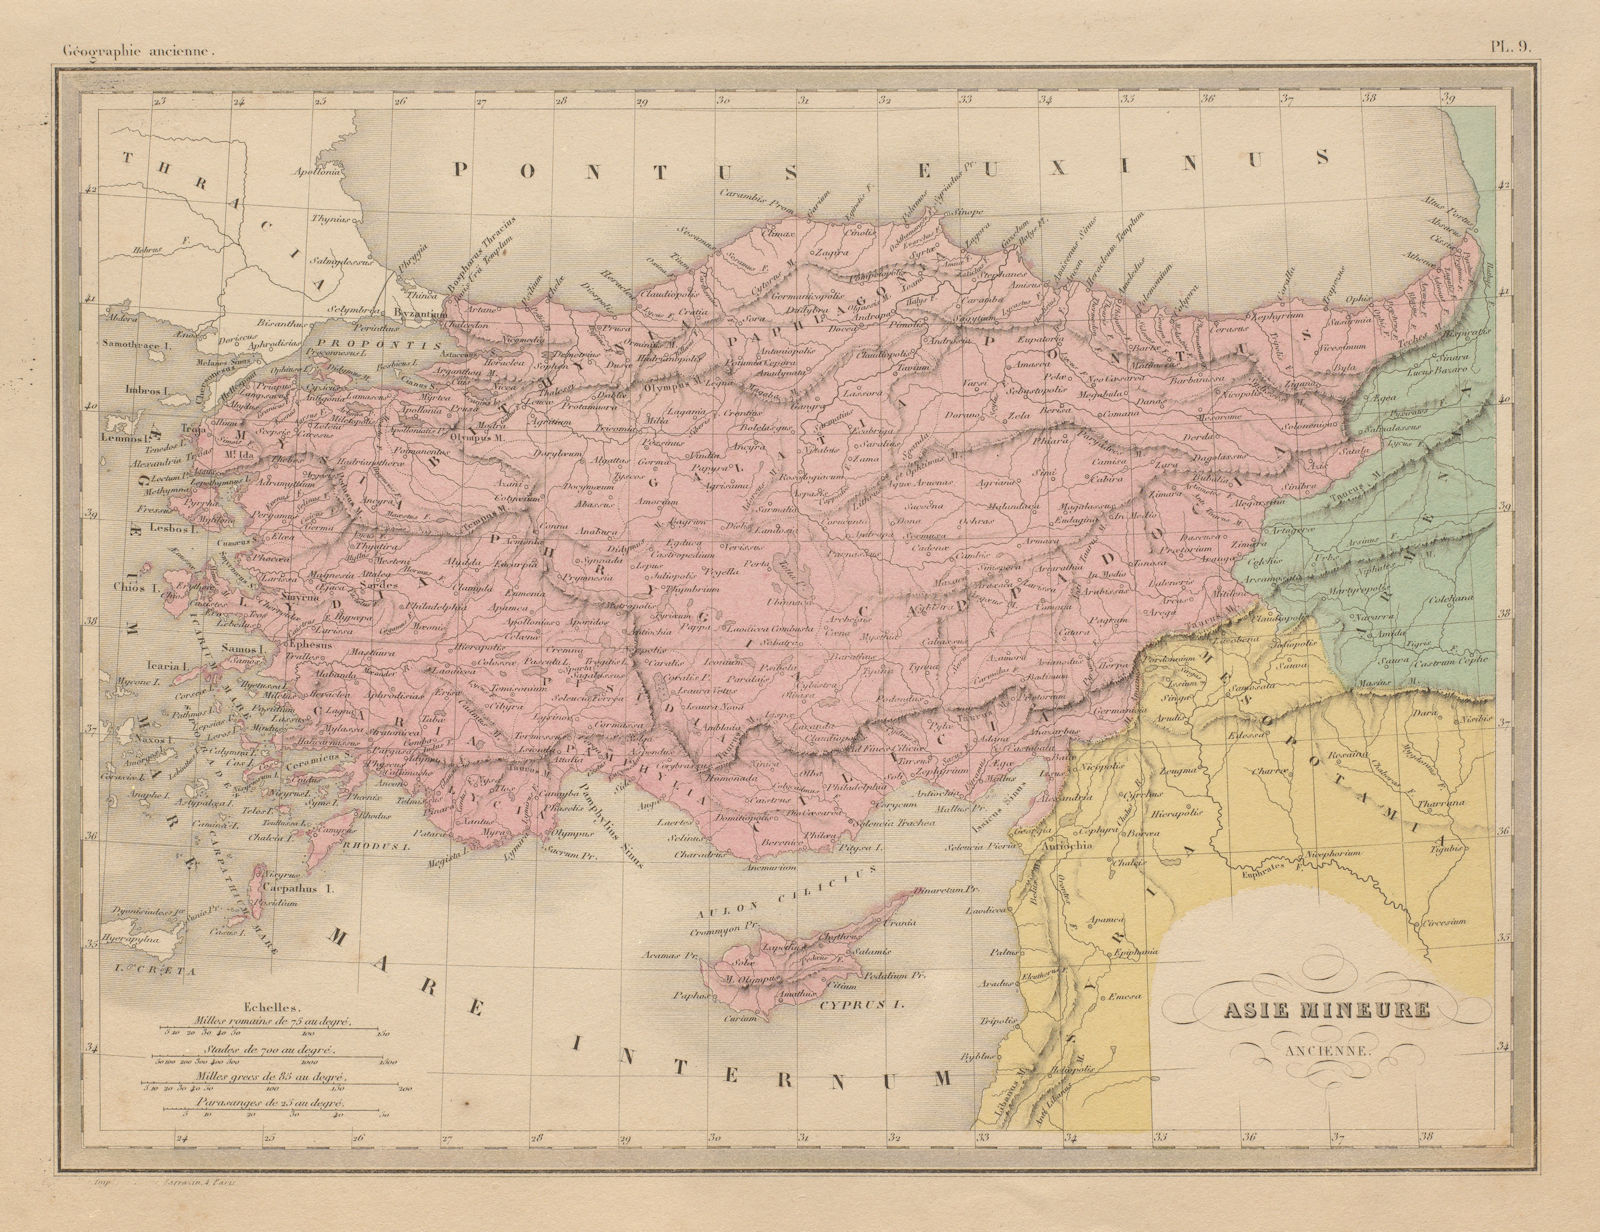 Associate Product Asie Mineure Ancienne. Ancient Asia Minor. Turkey Anatolia. MALTE-BRUN c1871 map